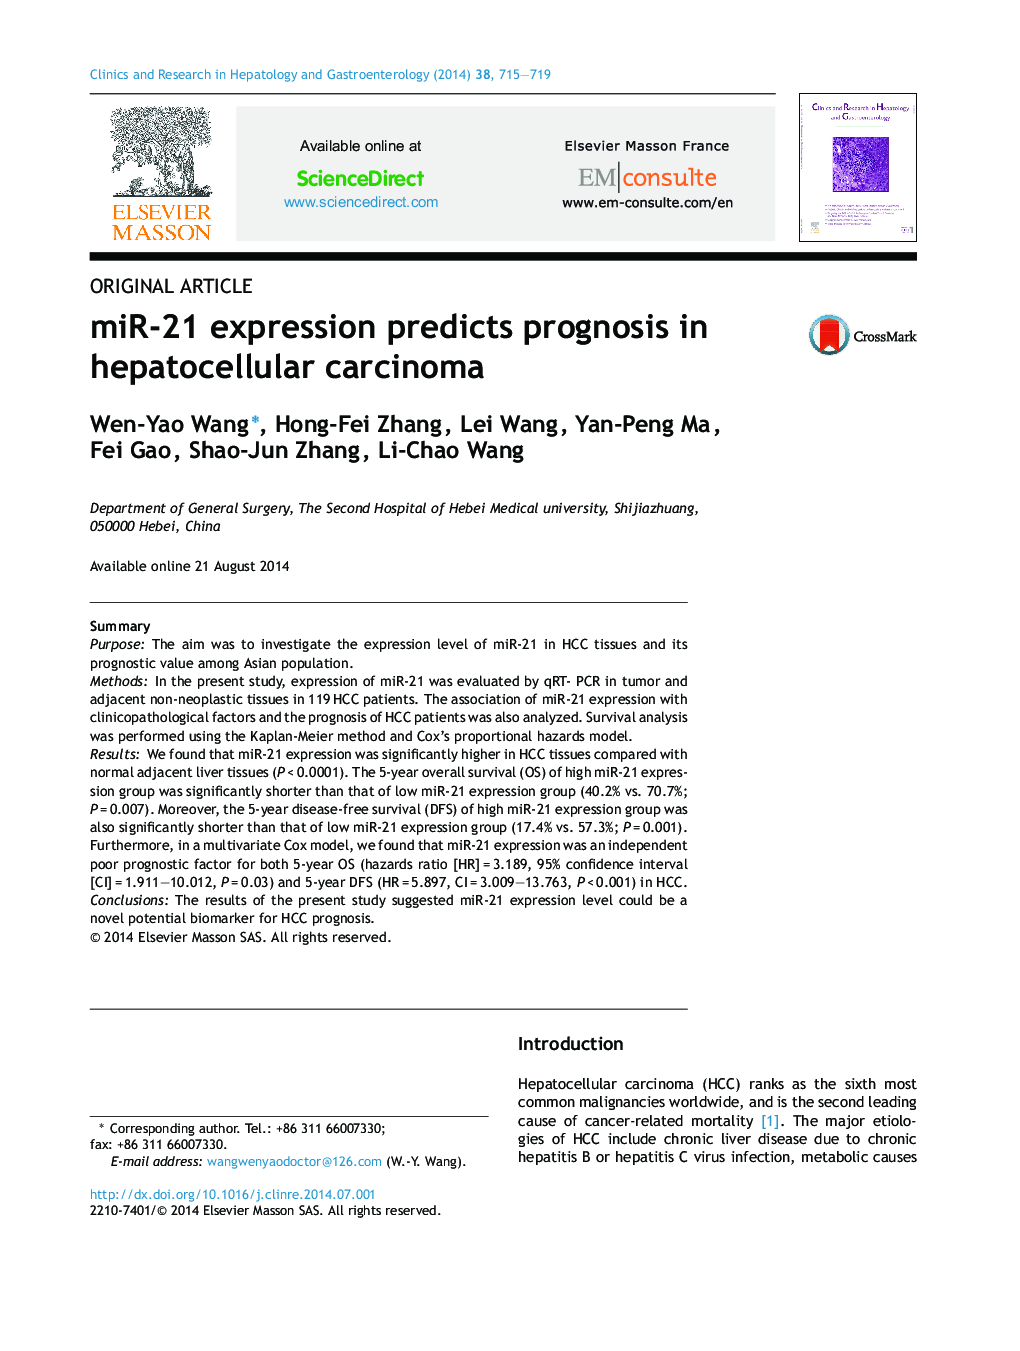 miR-21 expression predicts prognosis in hepatocellular carcinoma